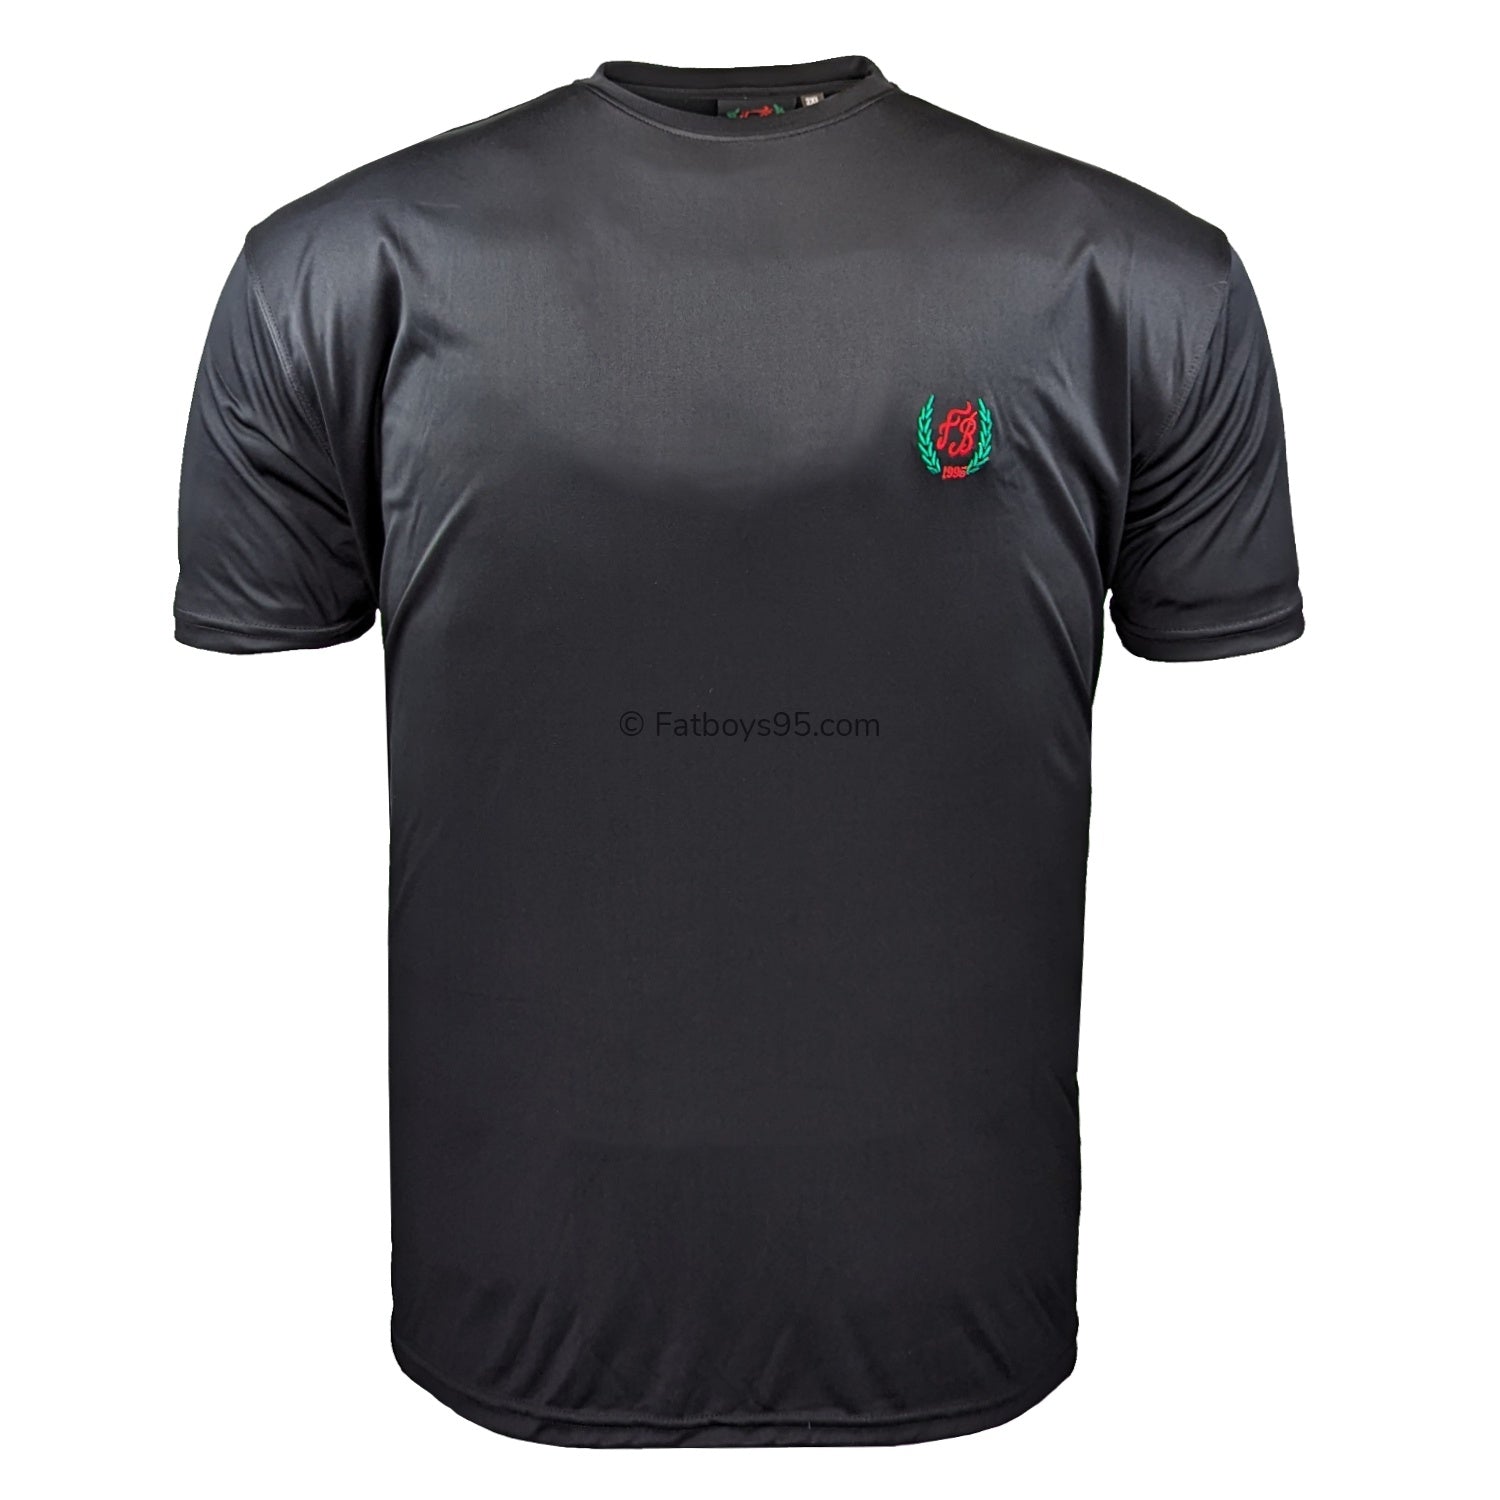 FB Performance T-Shirt - FBT 2401 - Black 1